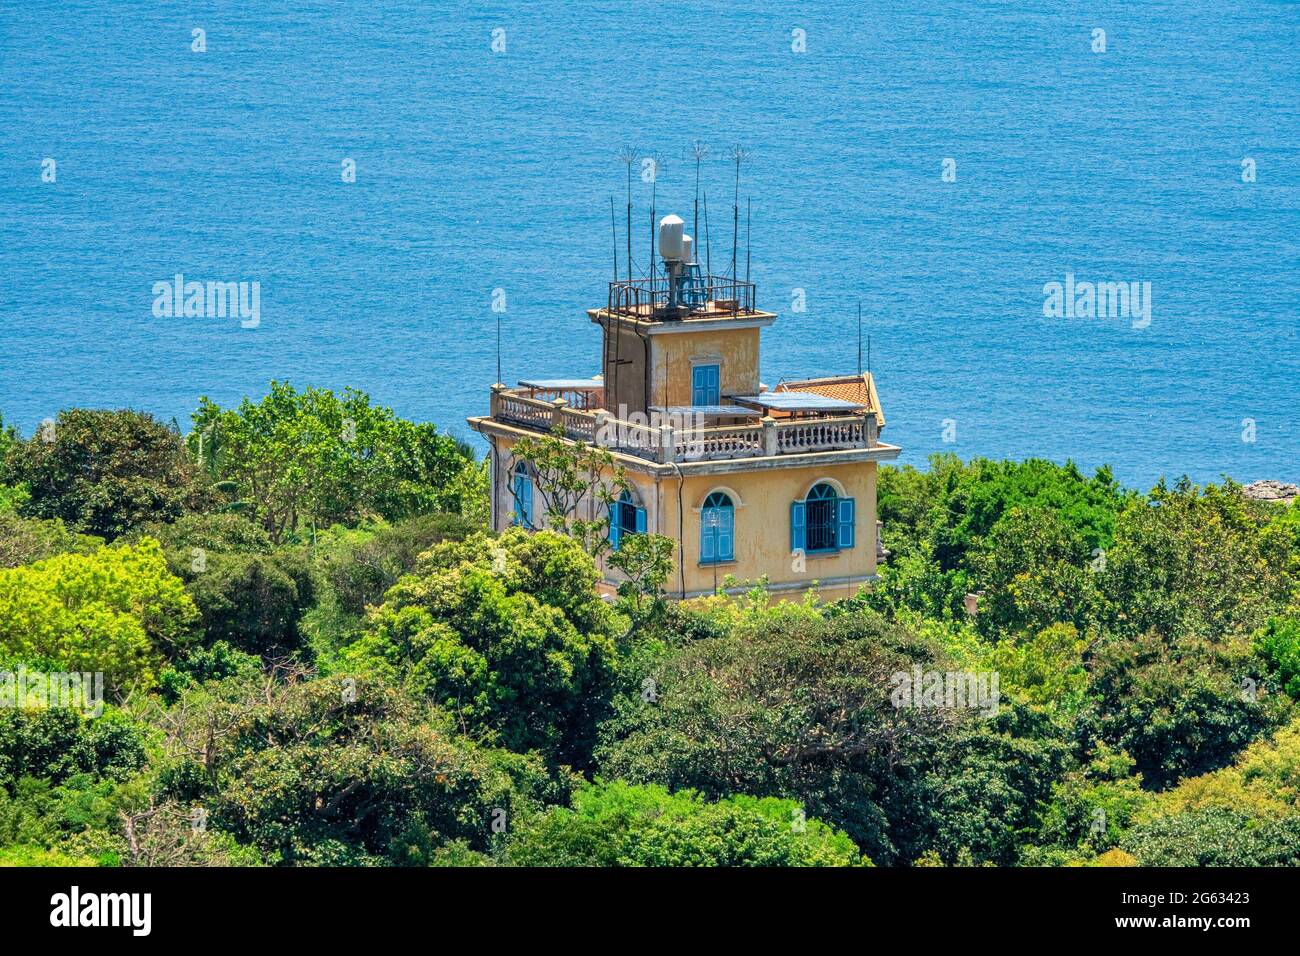 Cu Lao Cham lighthouse at CuLaoCham Island, Hoi An, Vietnam Stock Photo